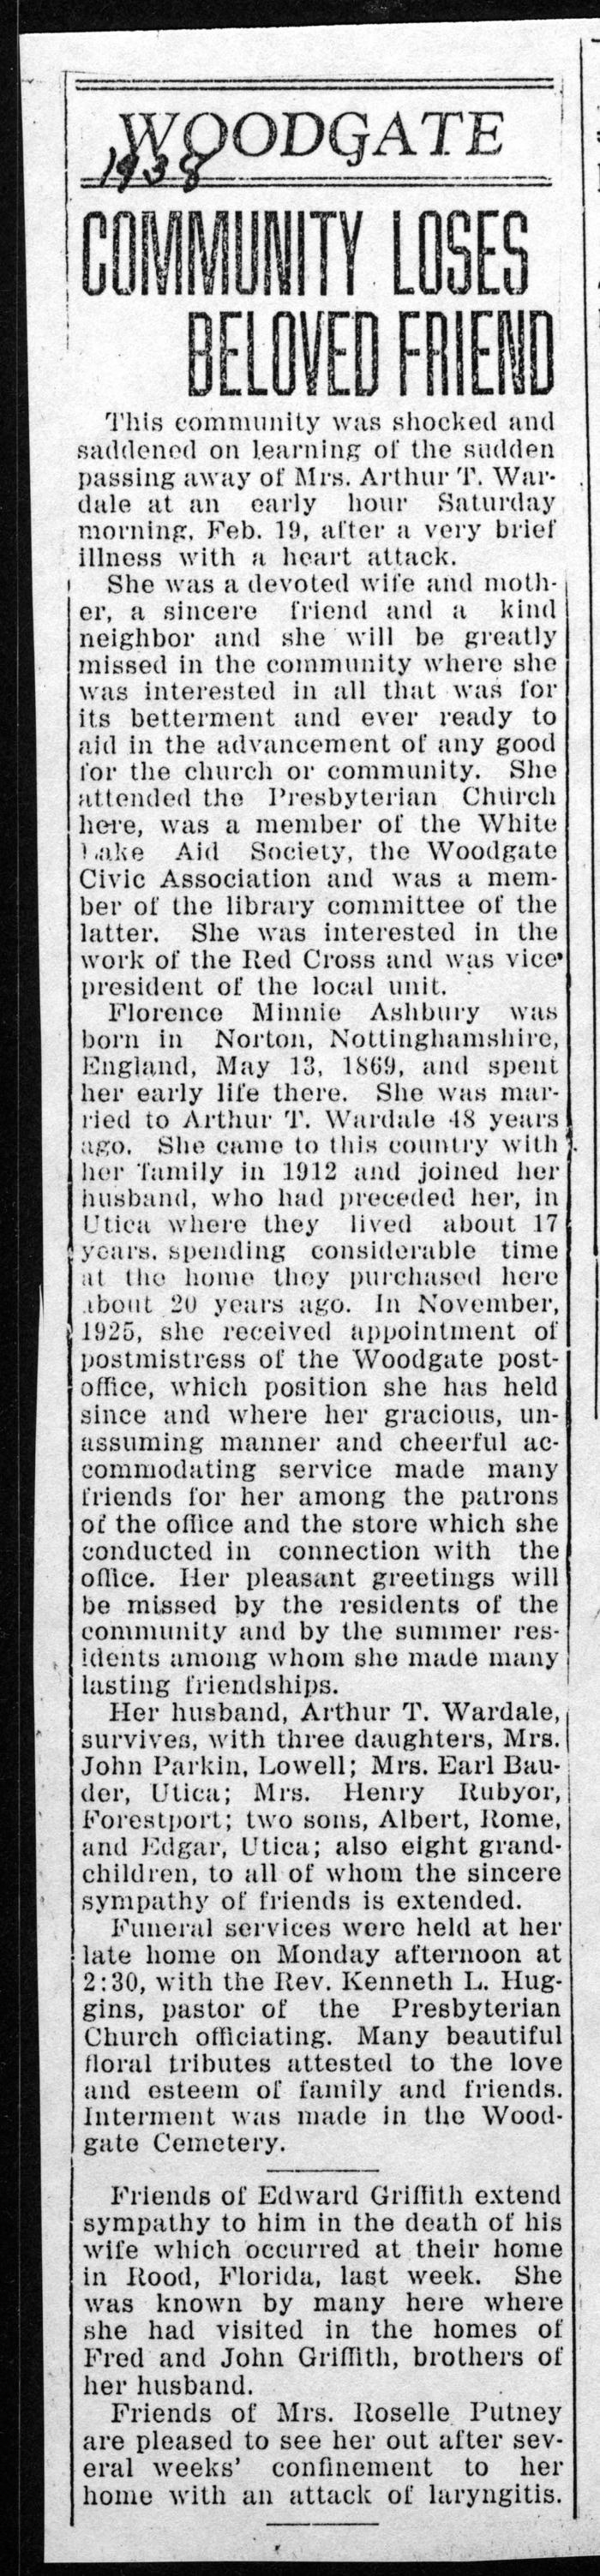 wardale florence minnie ashbury wife of arthur t obit february 19 1938 001